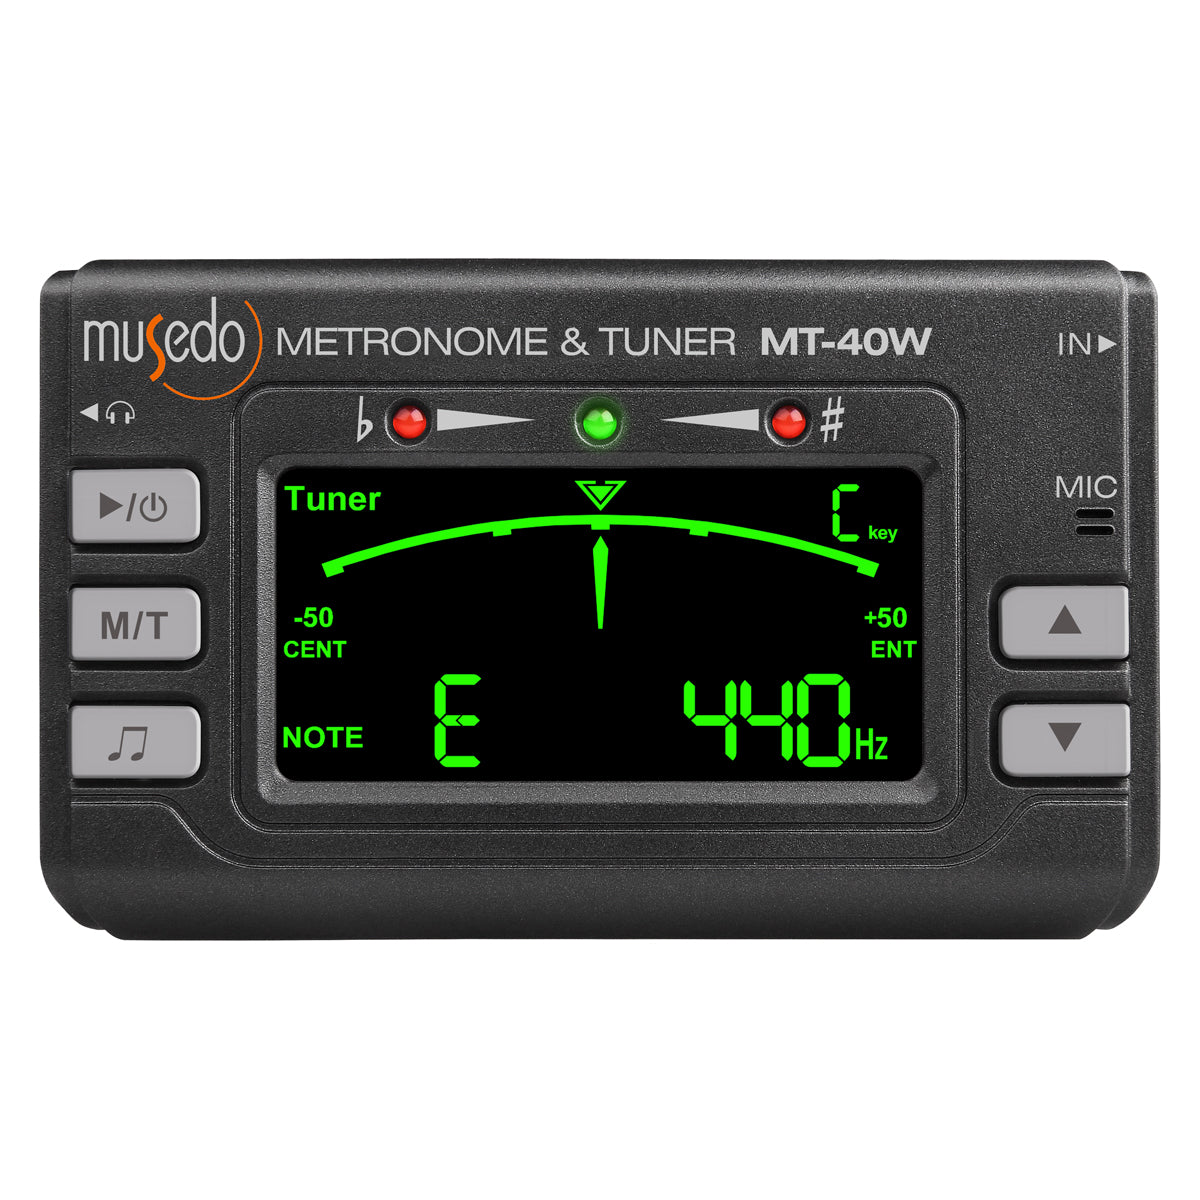 MUSEDO MT-40W METRONOME & TUNER